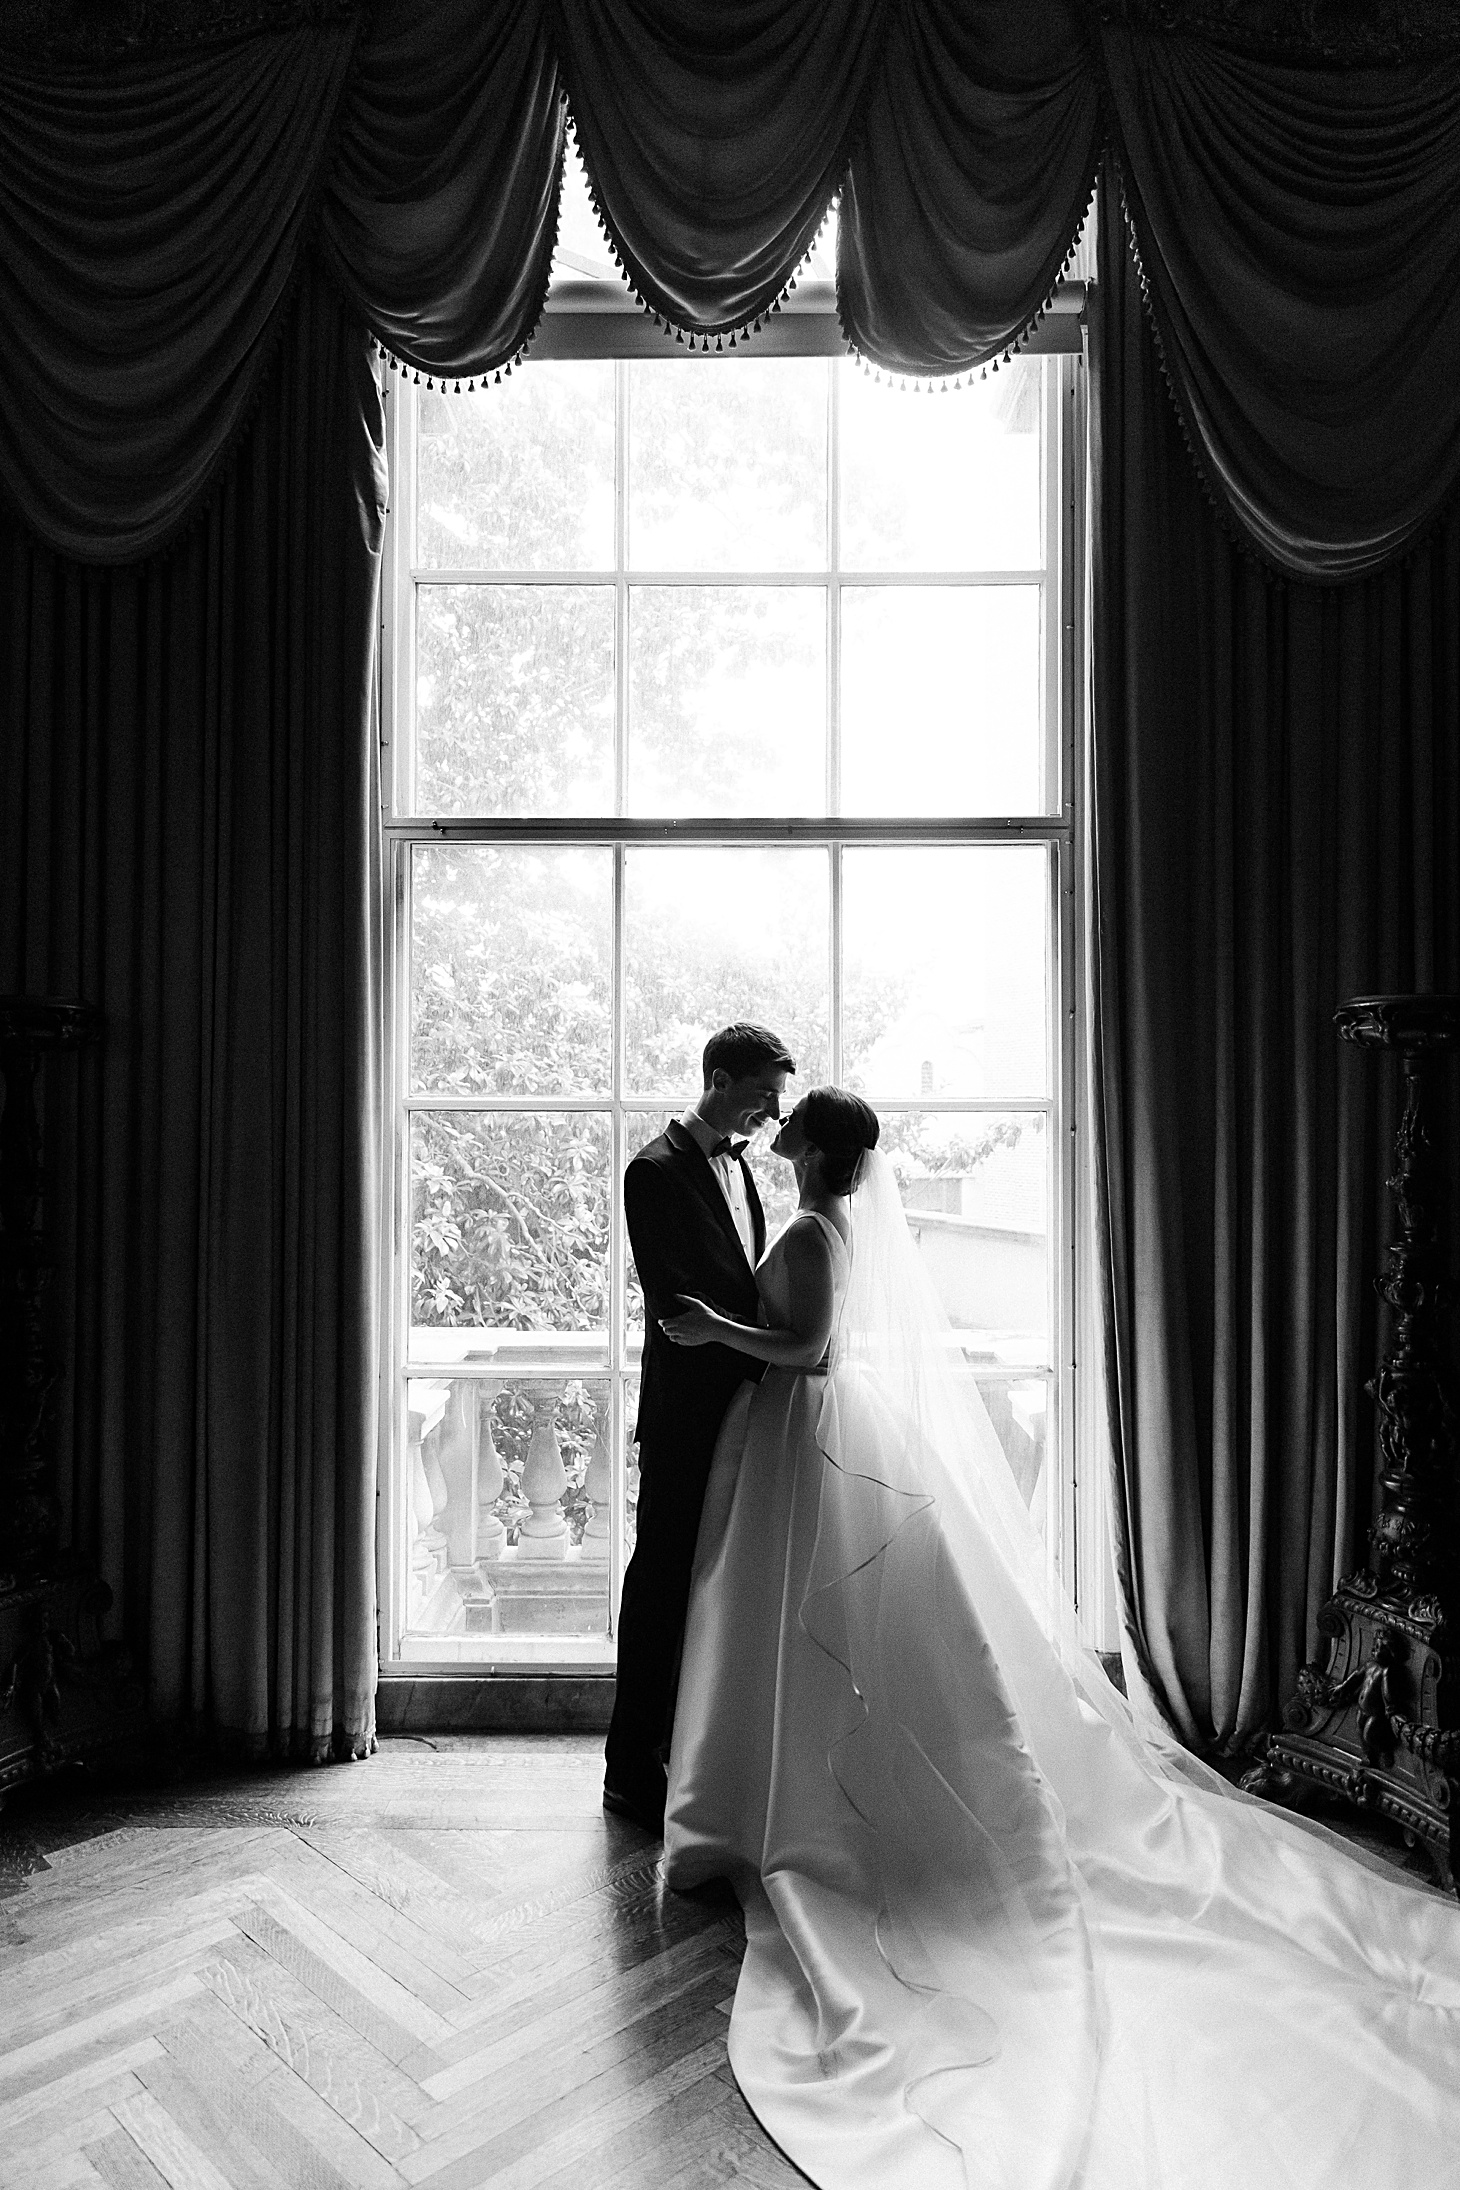 Bride & groom in window at Anderson House Wedding by Sarah Bradshaw